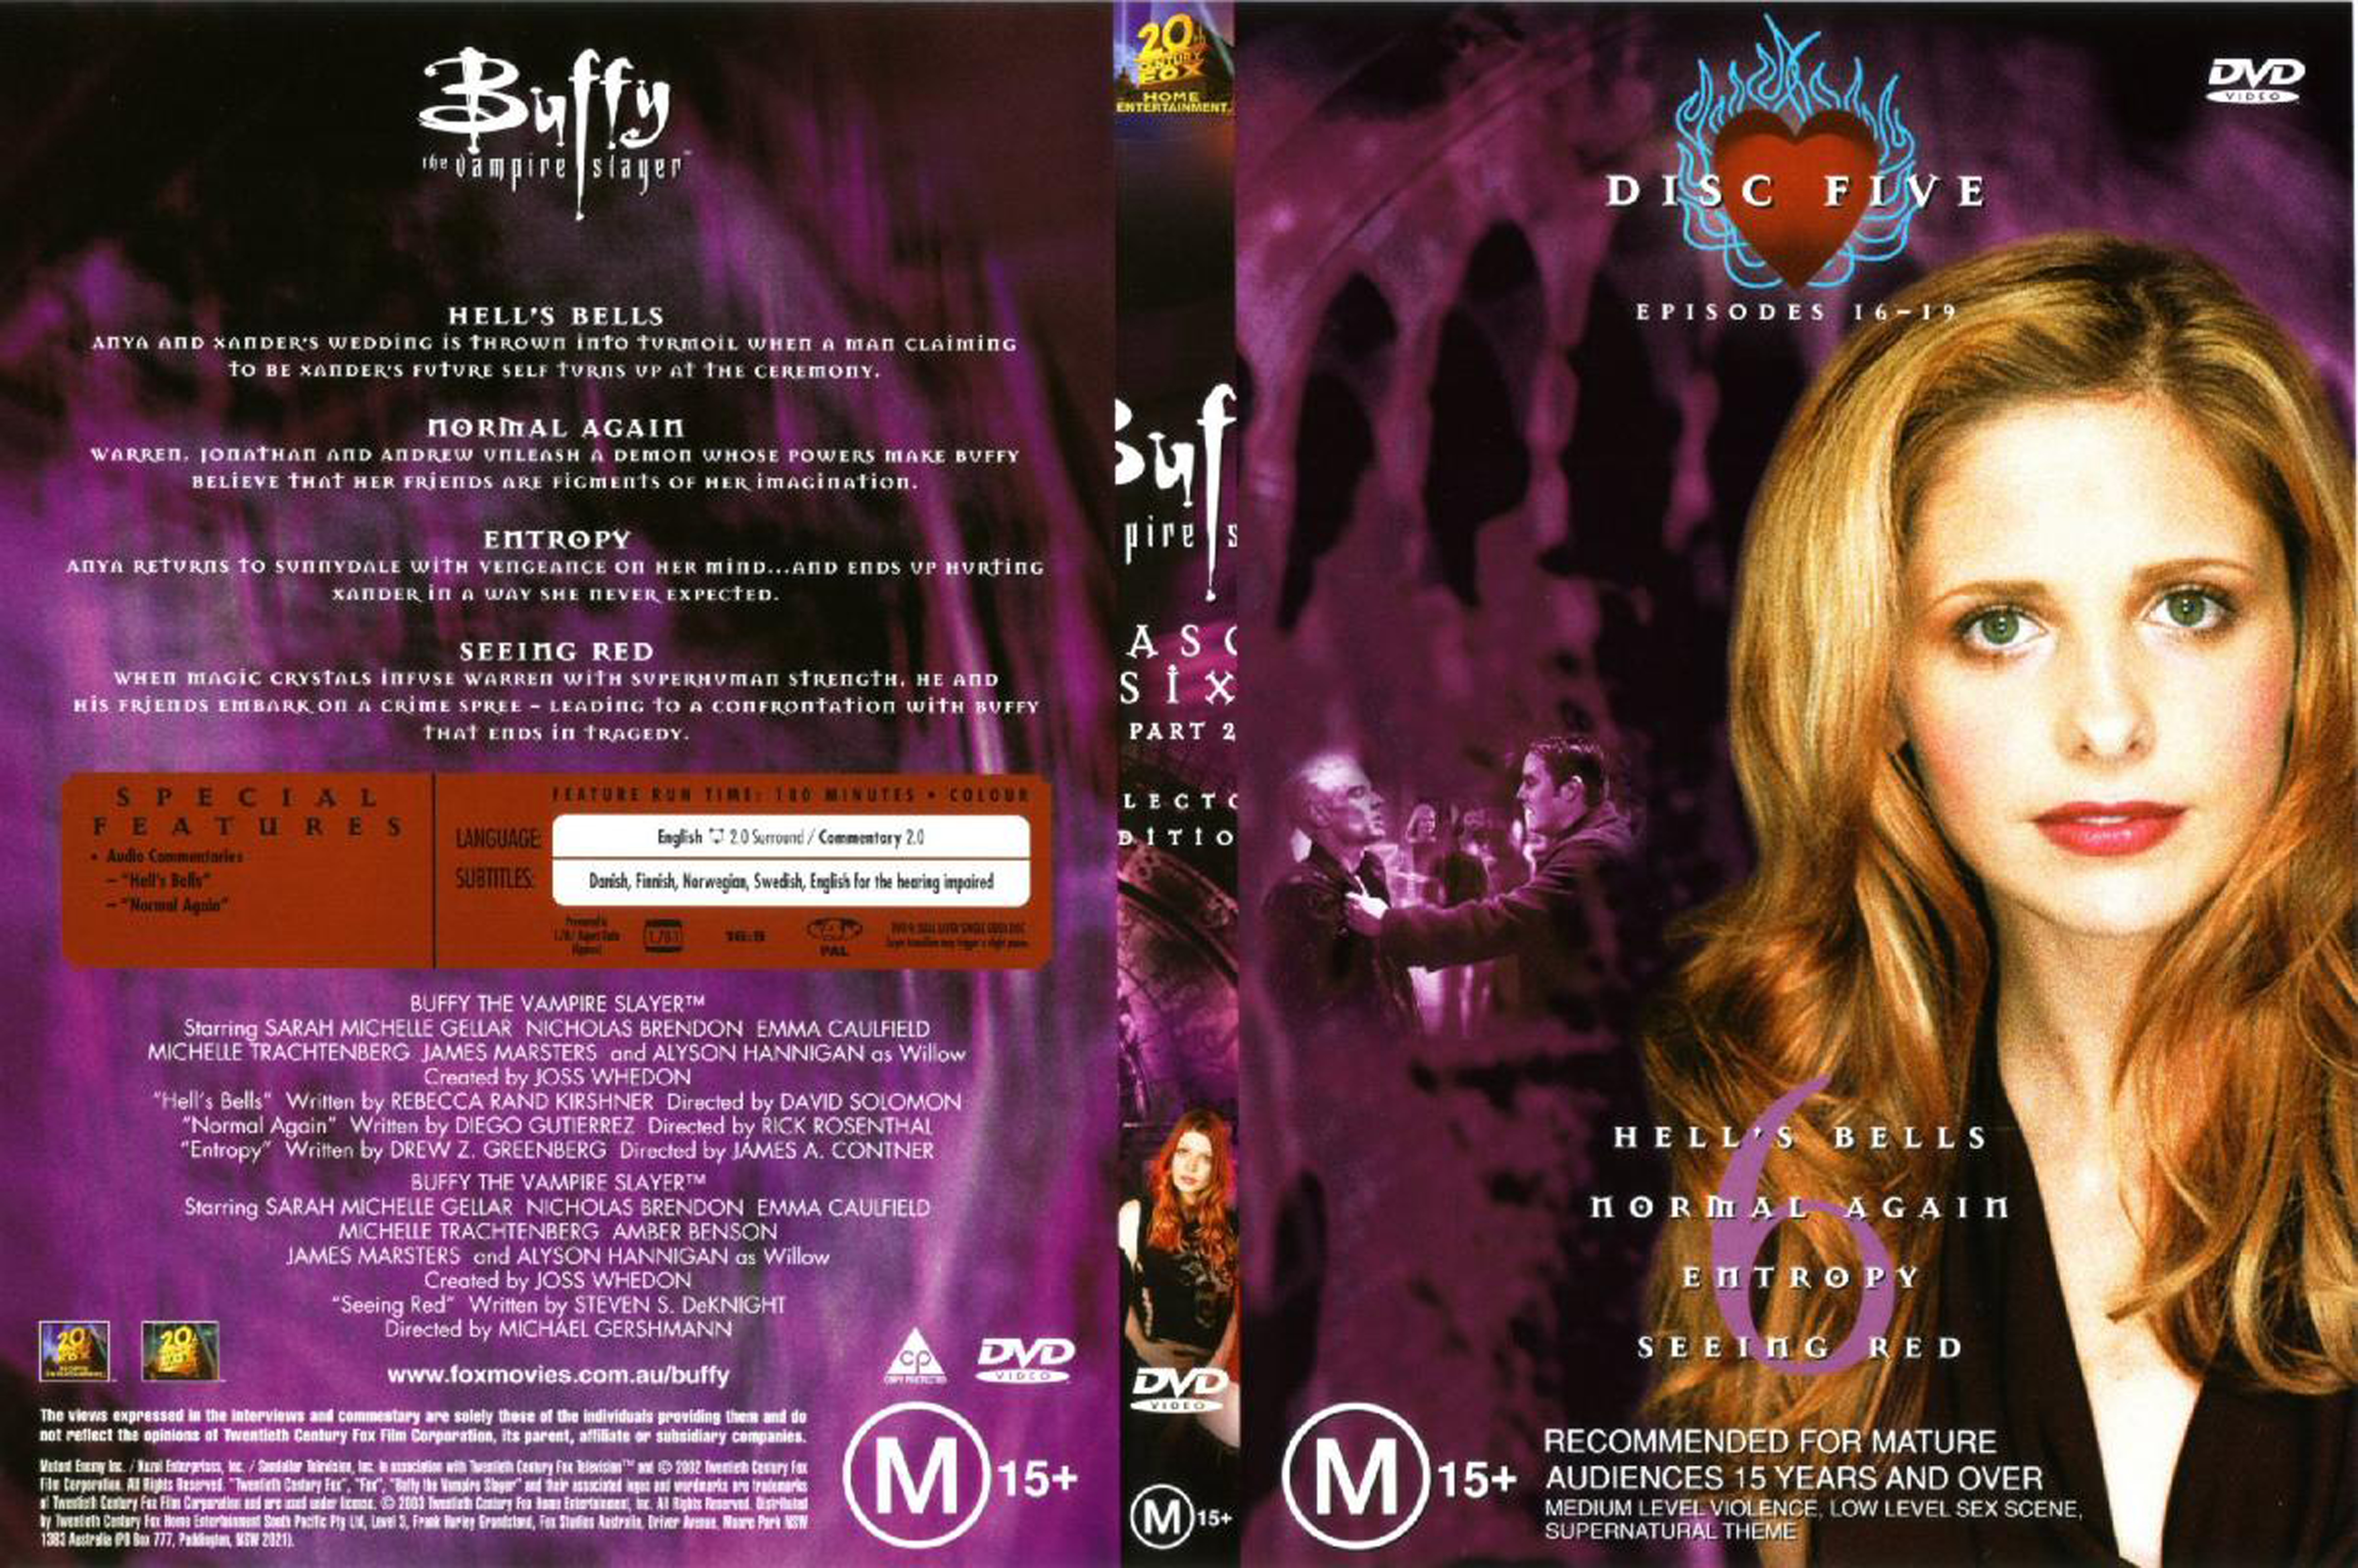 Buffy The Vampire Slayer season 6 disk 5